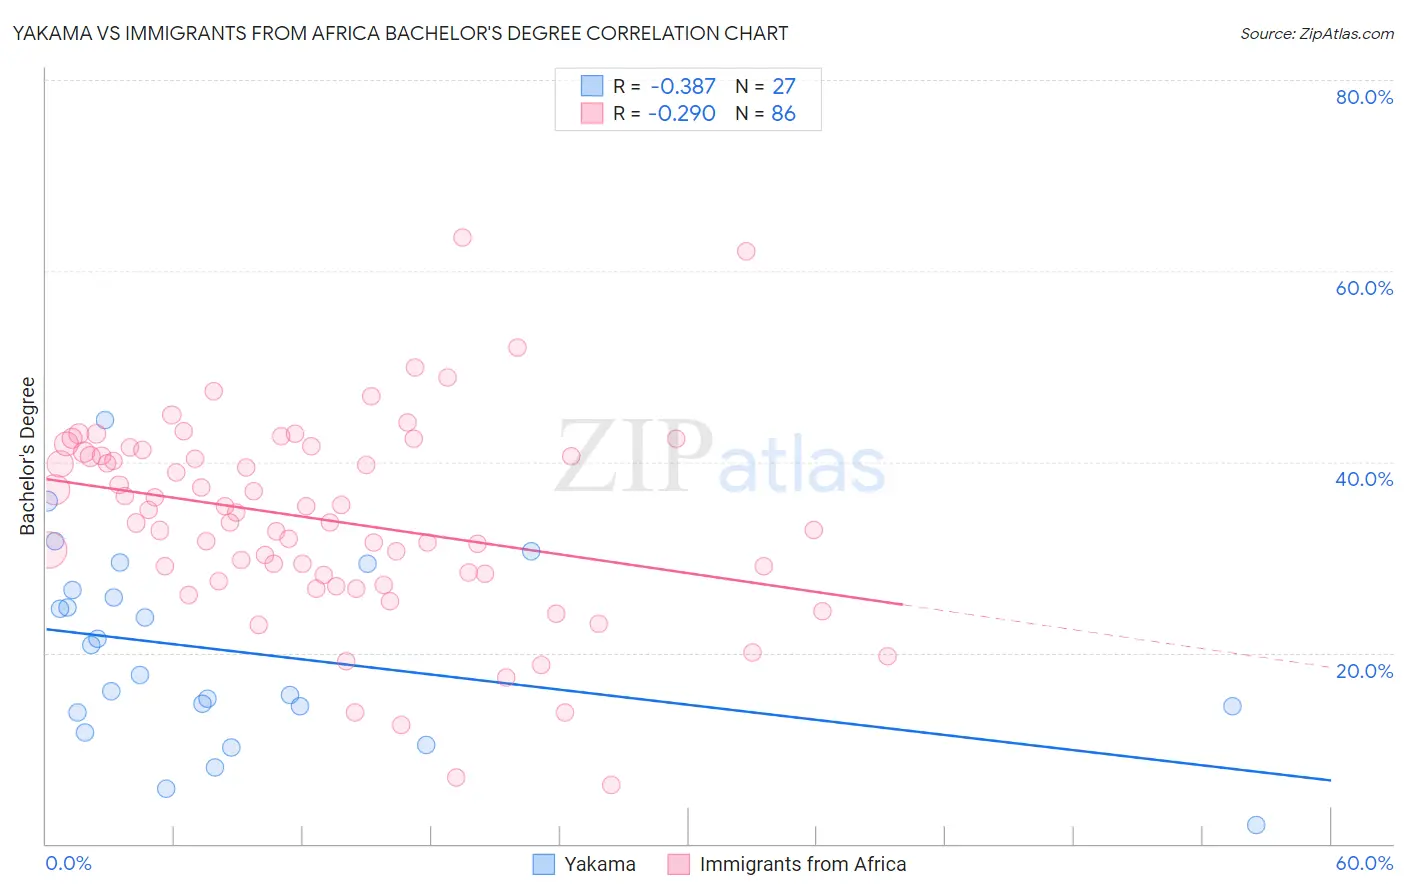 Yakama vs Immigrants from Africa Bachelor's Degree